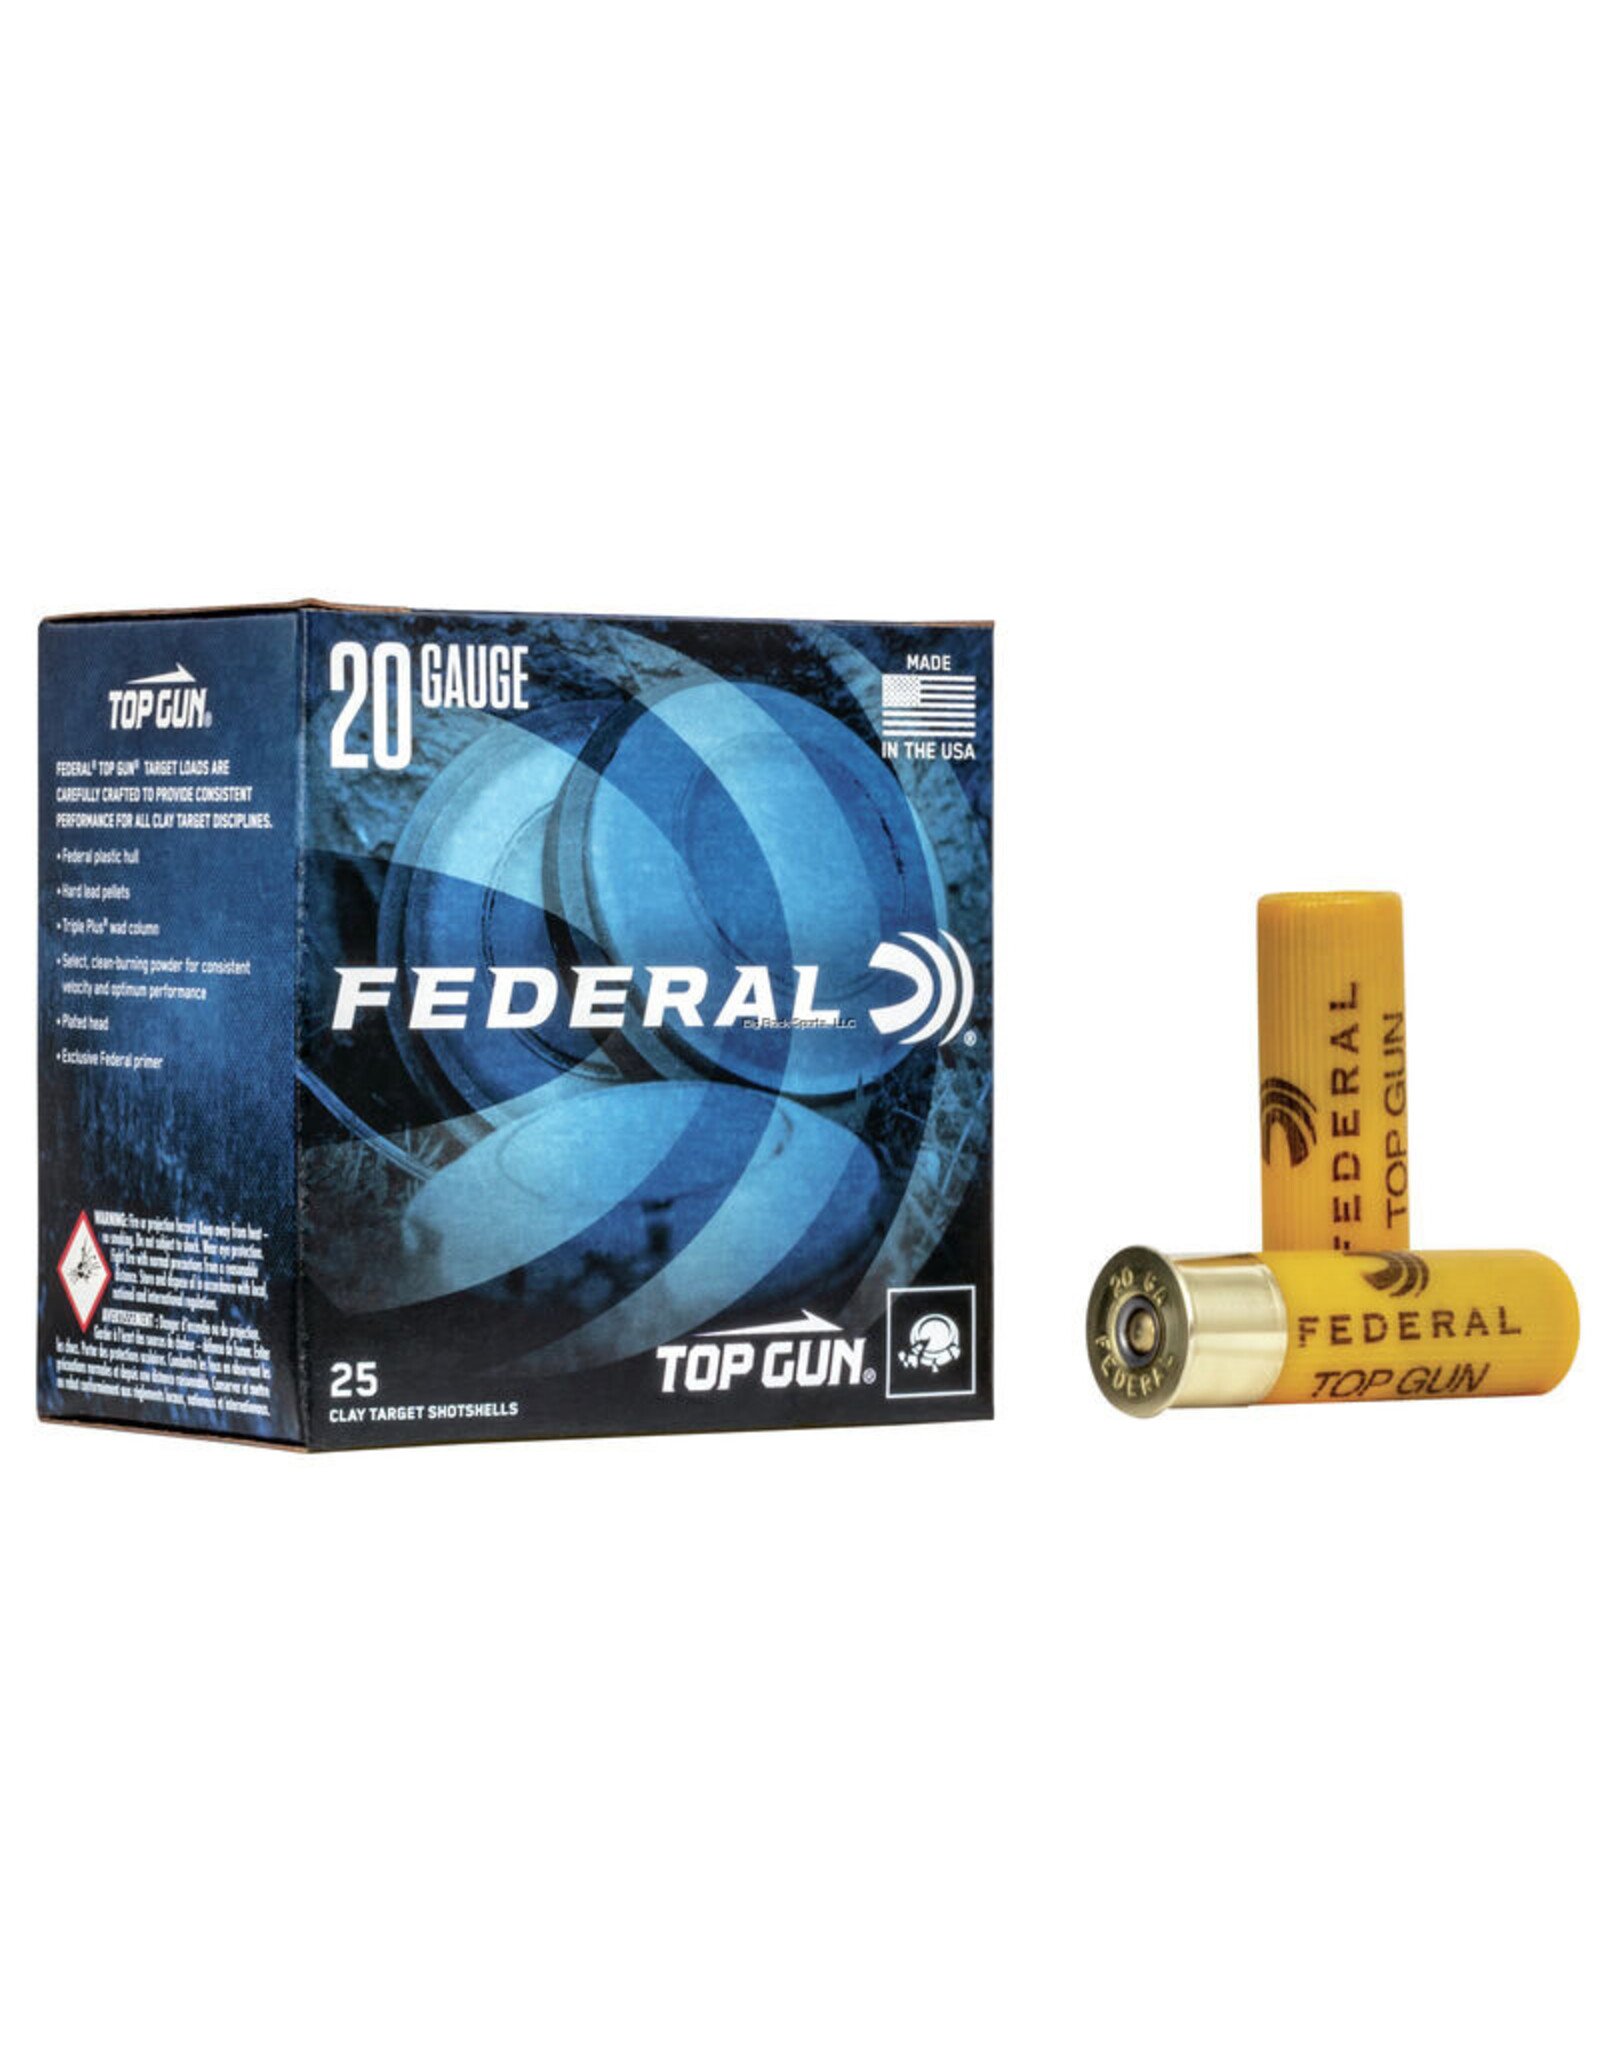 Federal Federal TG20 7.5 Top Gun Target Shotshell 20 GA, 2-3/4 in, No. 7-1/2, 7/8oz, 2.38 Dr, 1210 fps, 25 Rnd per Box (Entire Flat 250 Rnd)